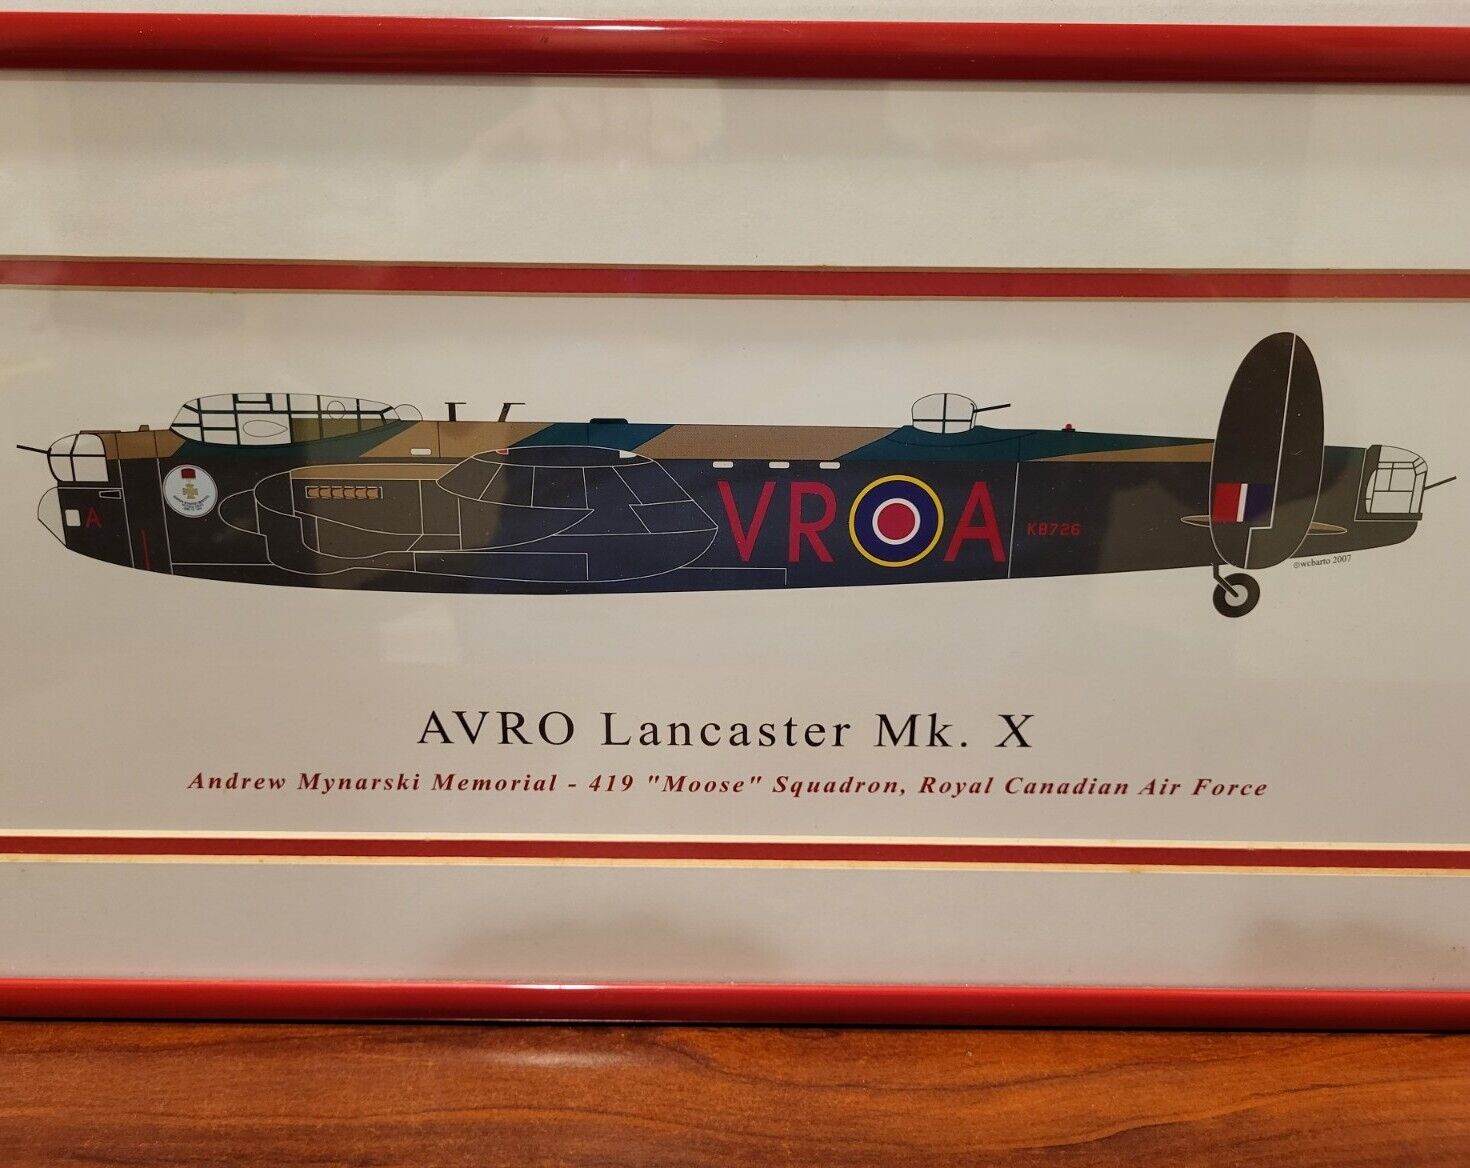 AVRO Lancaster Mk. X   FRAMED PRINT  20 x 9 in.  MOOSE SQUADRON  Royal Canadian